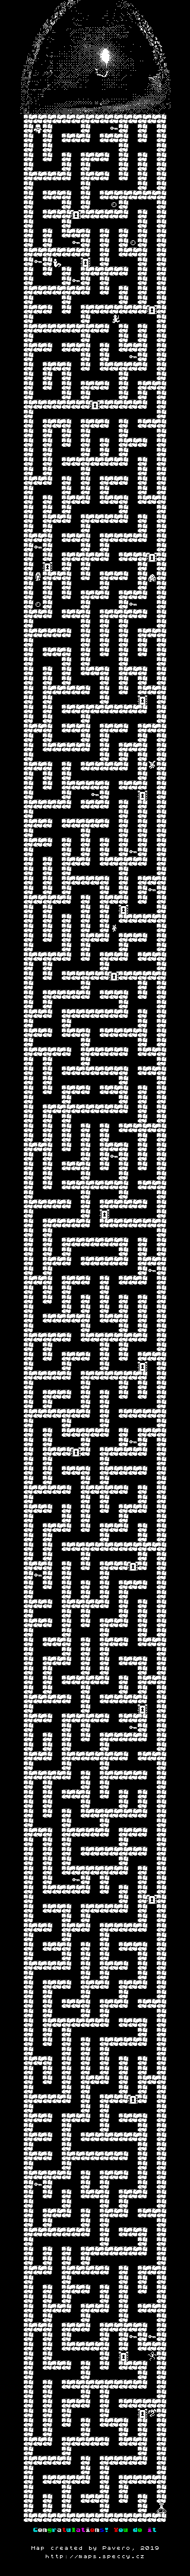 labyrinth sophia2